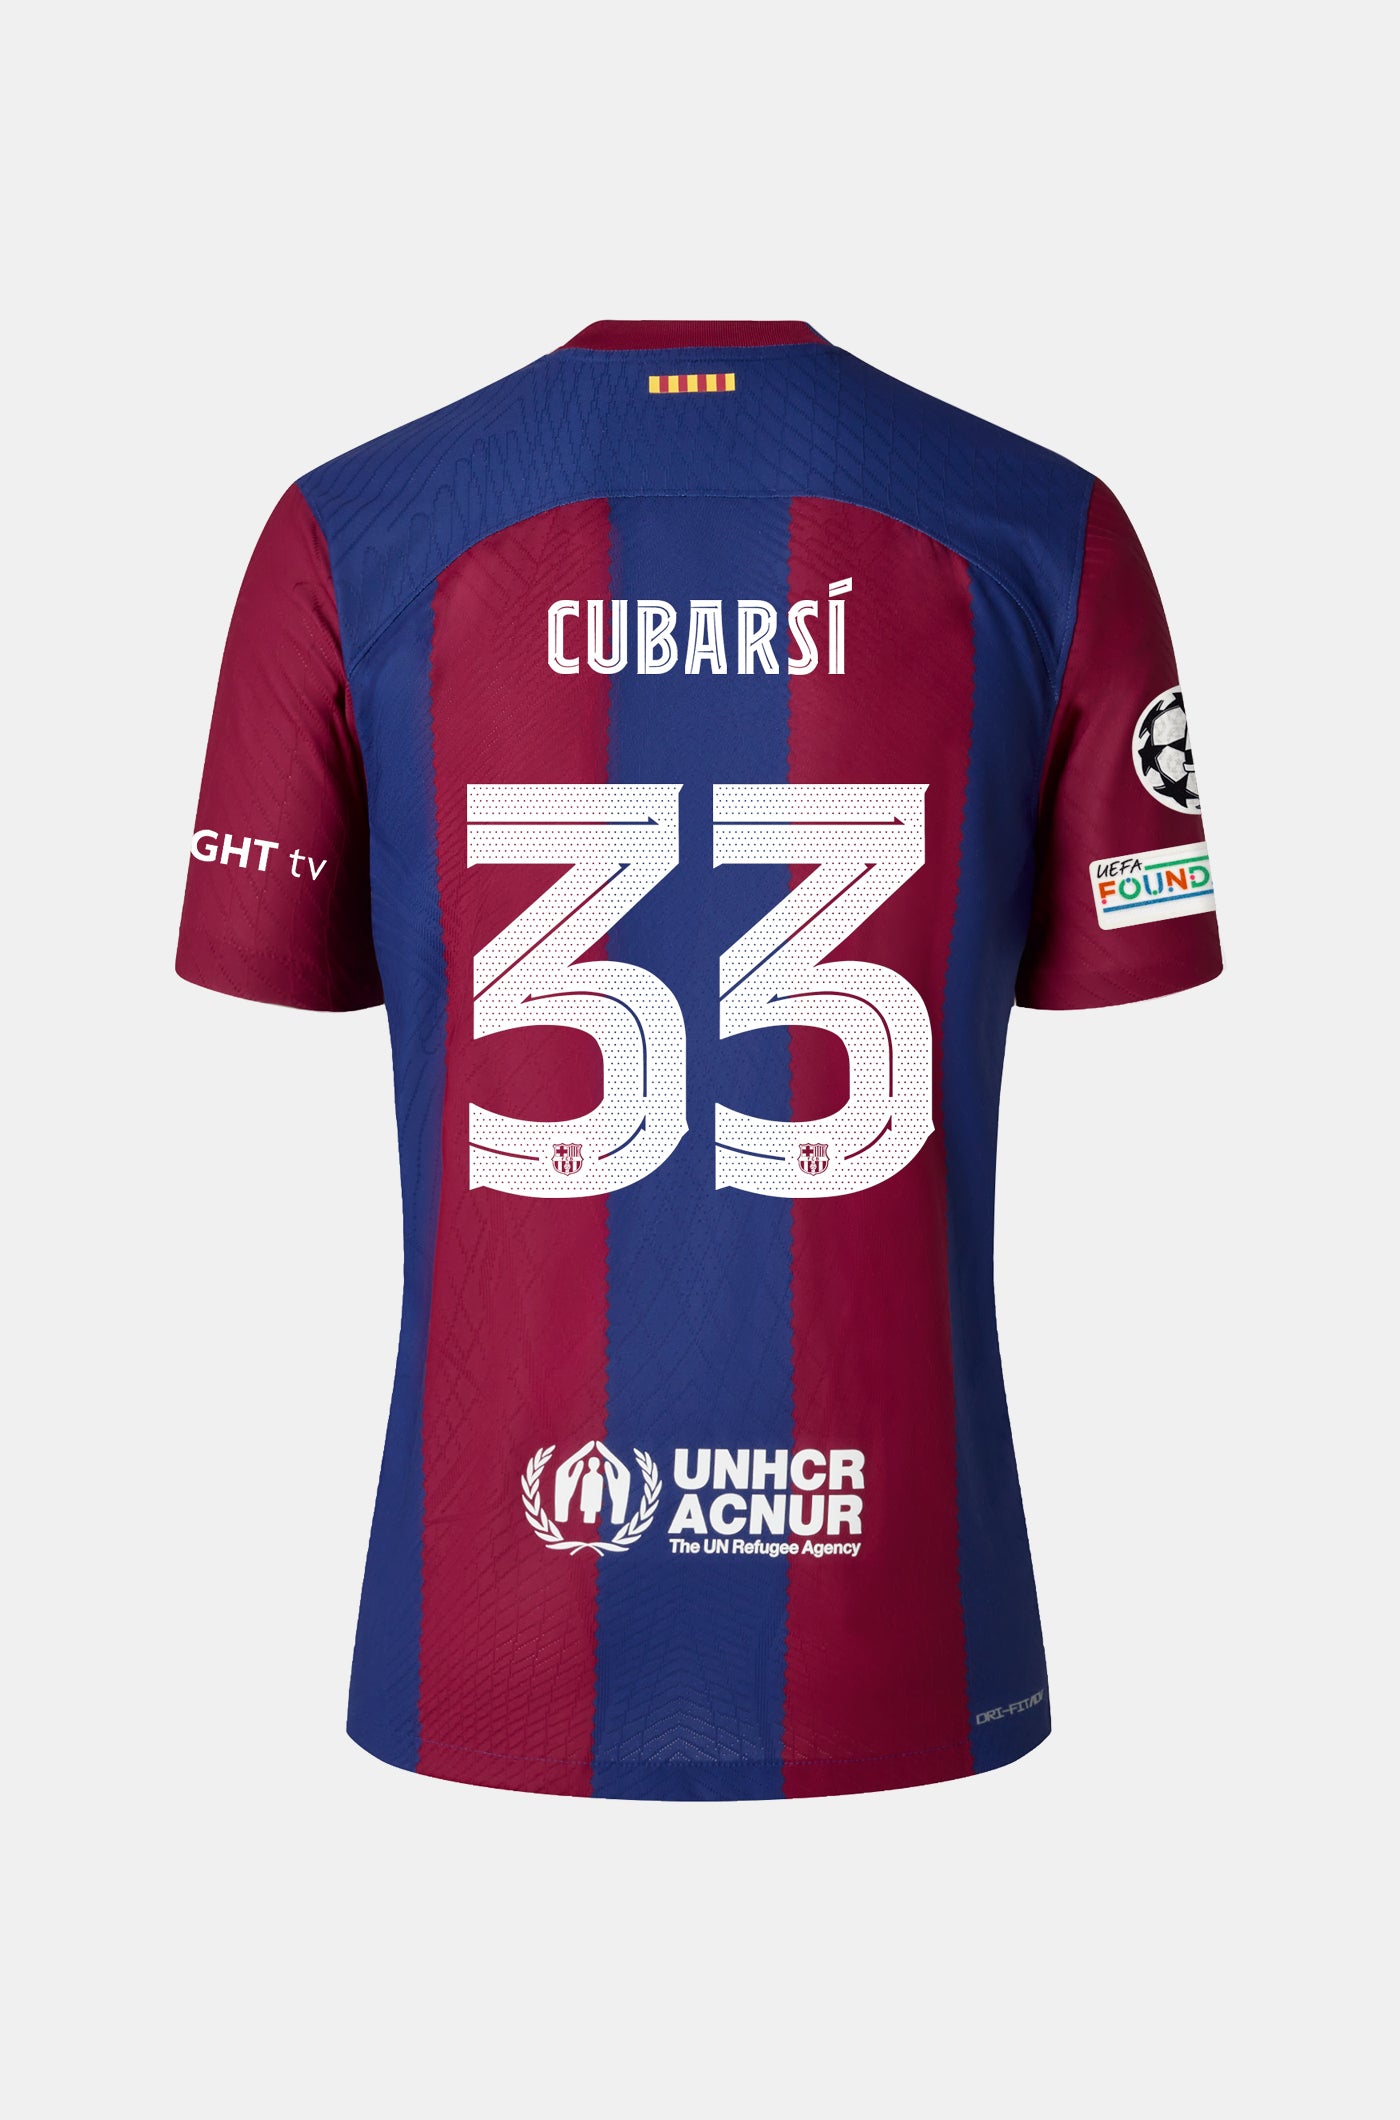 UCL FC Barcelona home shirt 23/24 - CUBARSÍ